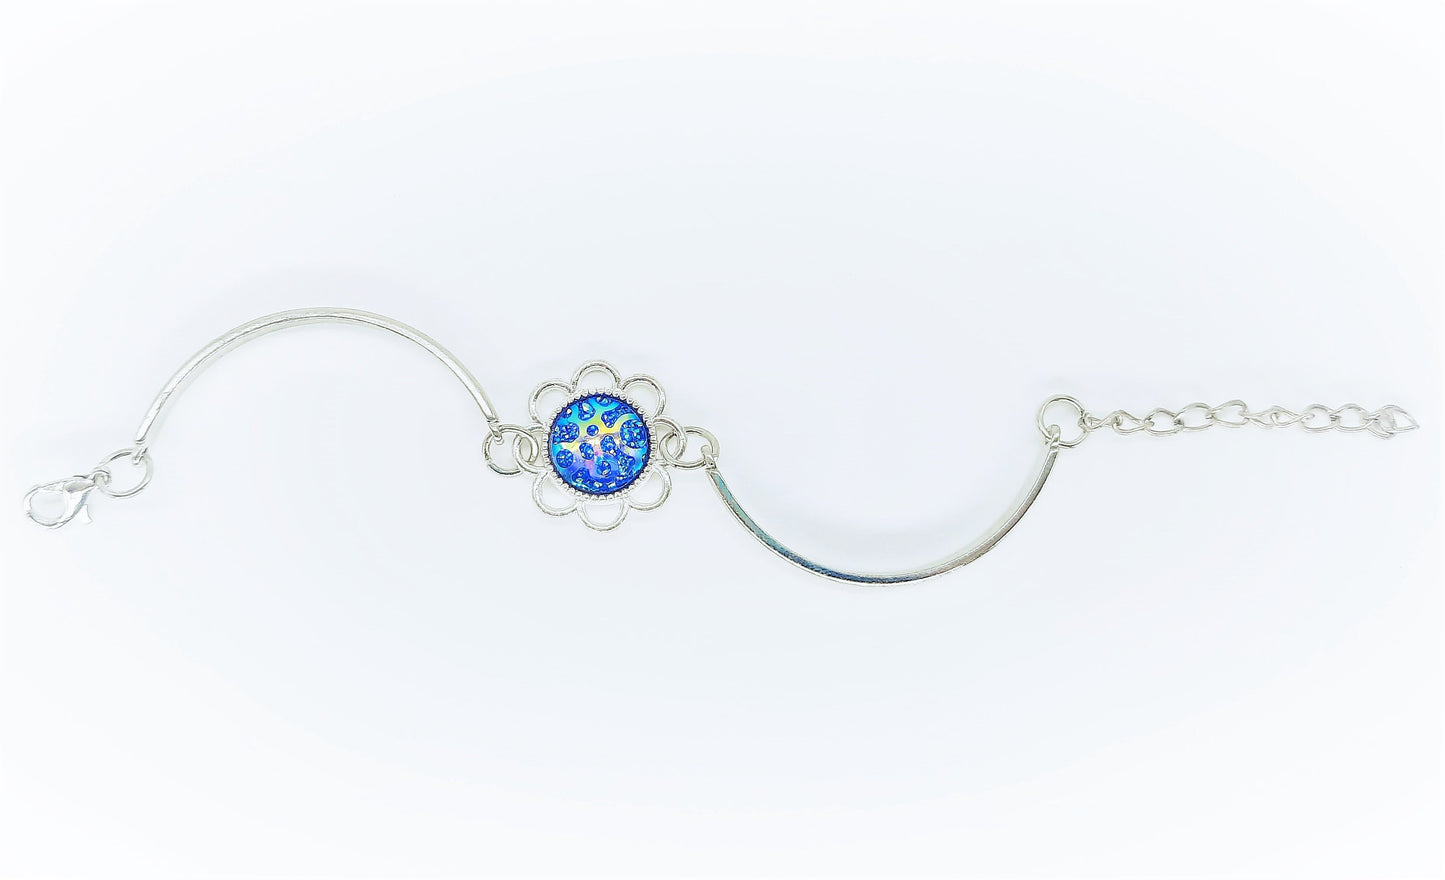 Handcrafted Flower Power Iridescent Blue Resin Stainless Steel Adjustable Bangle Bracelet - Hypoallergenic